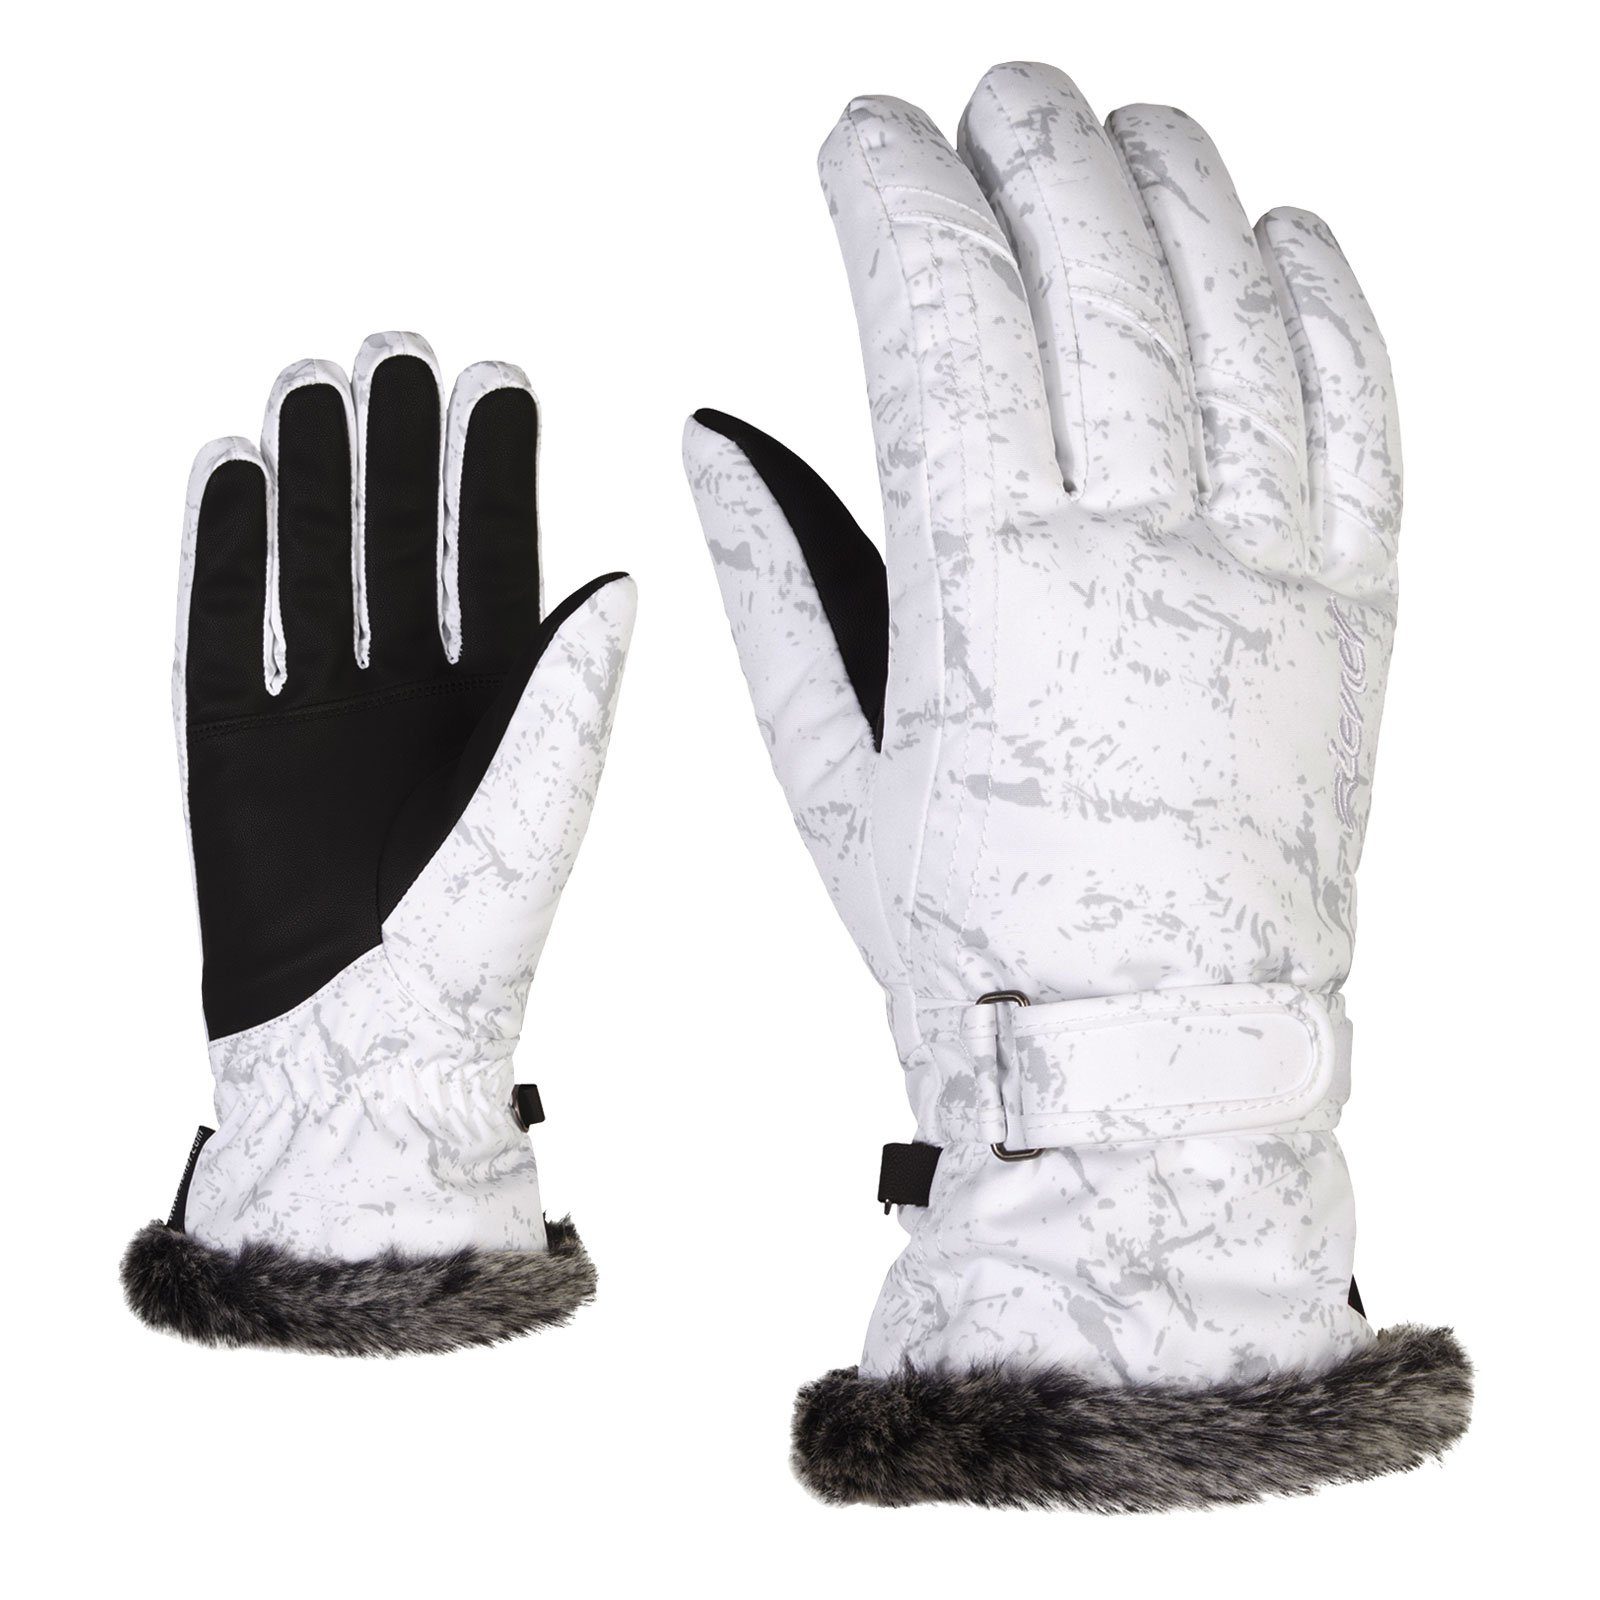 Ziener Skihandschuhe Kim mit Kunstfell an der Stulpe 198 marble grey camo | Handschuhe